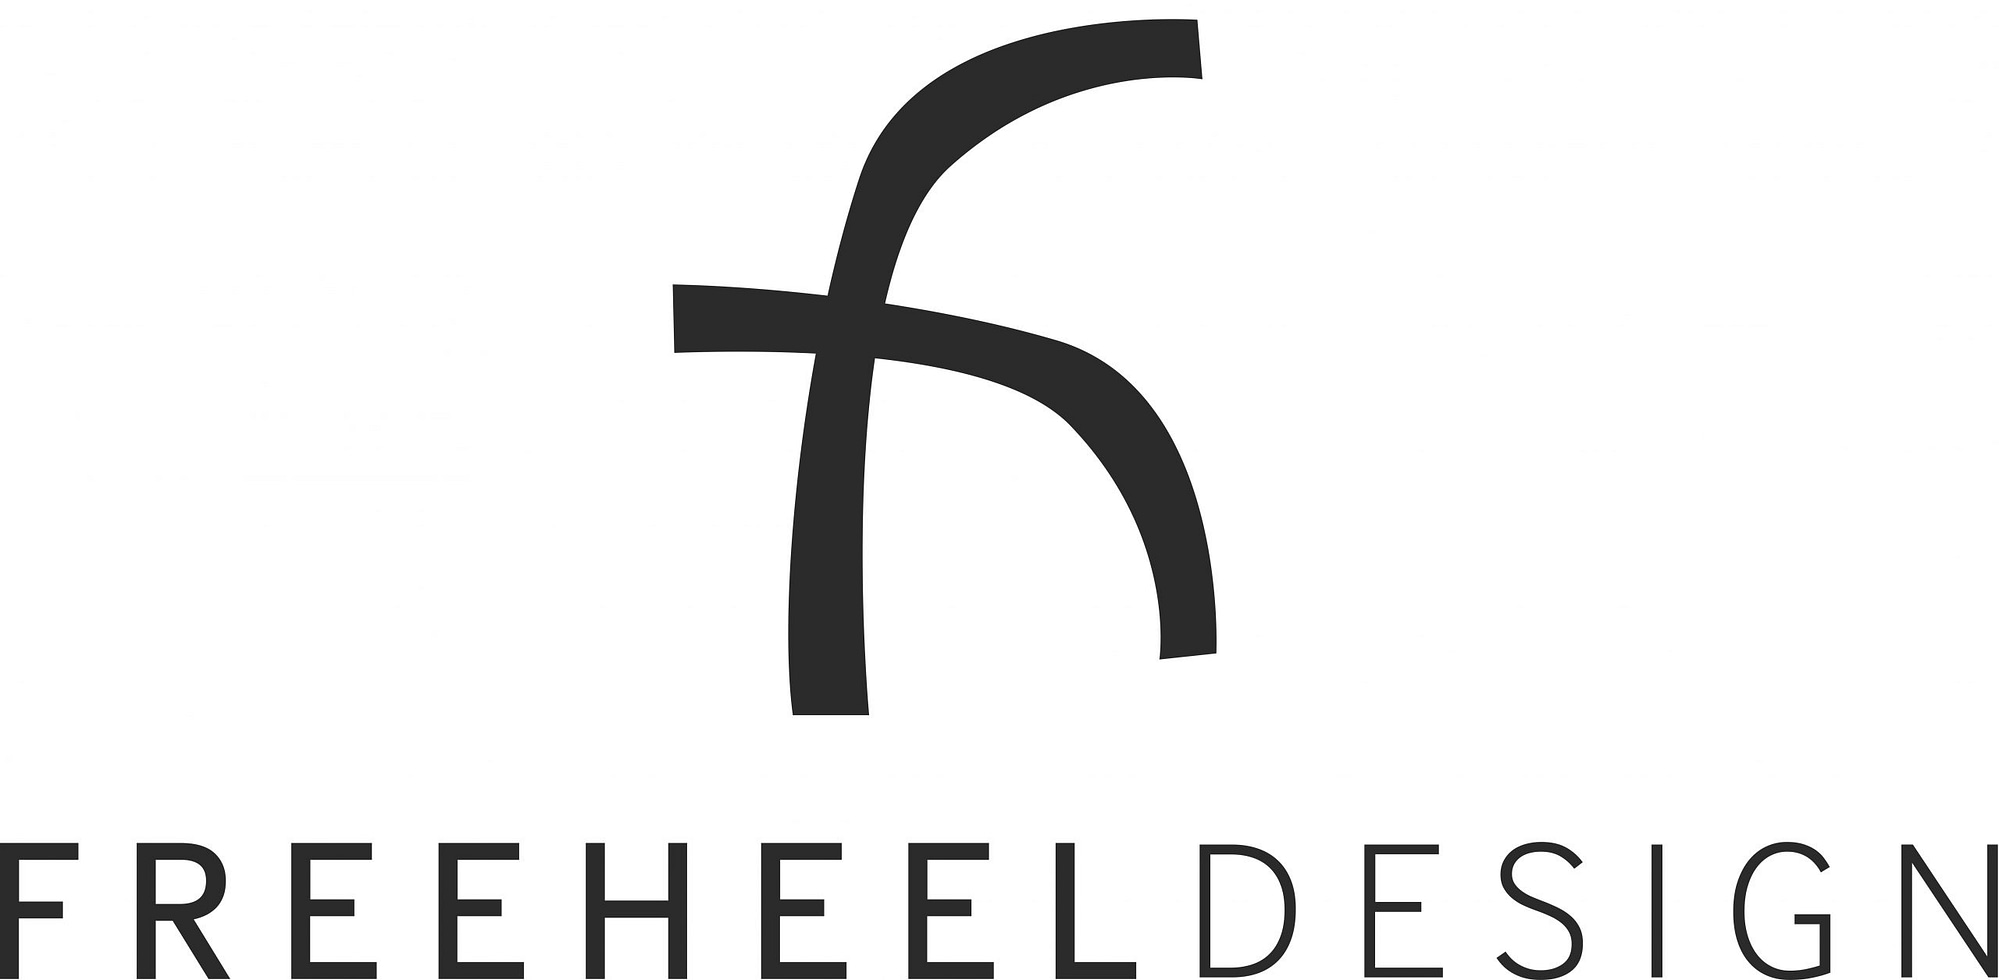 Freeheel design